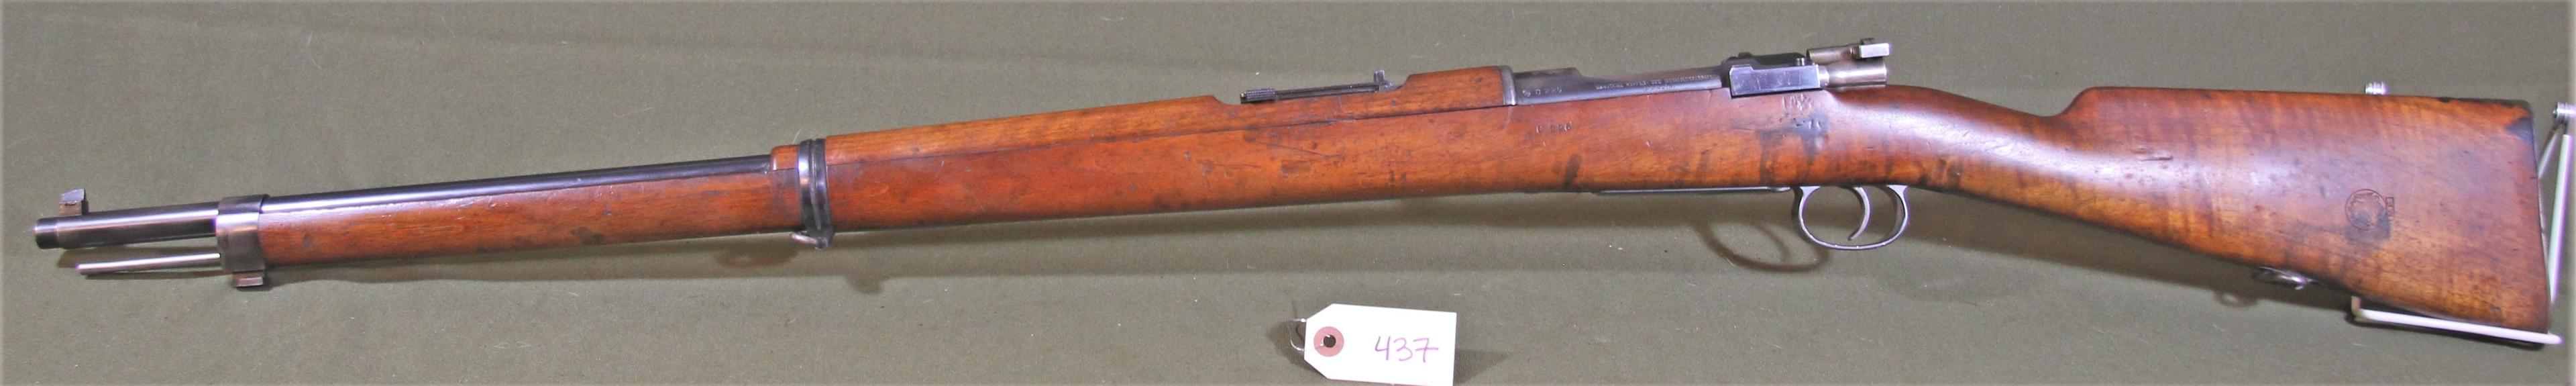 Spanish M-1893 Rifle 7x57 Mauser Bolt